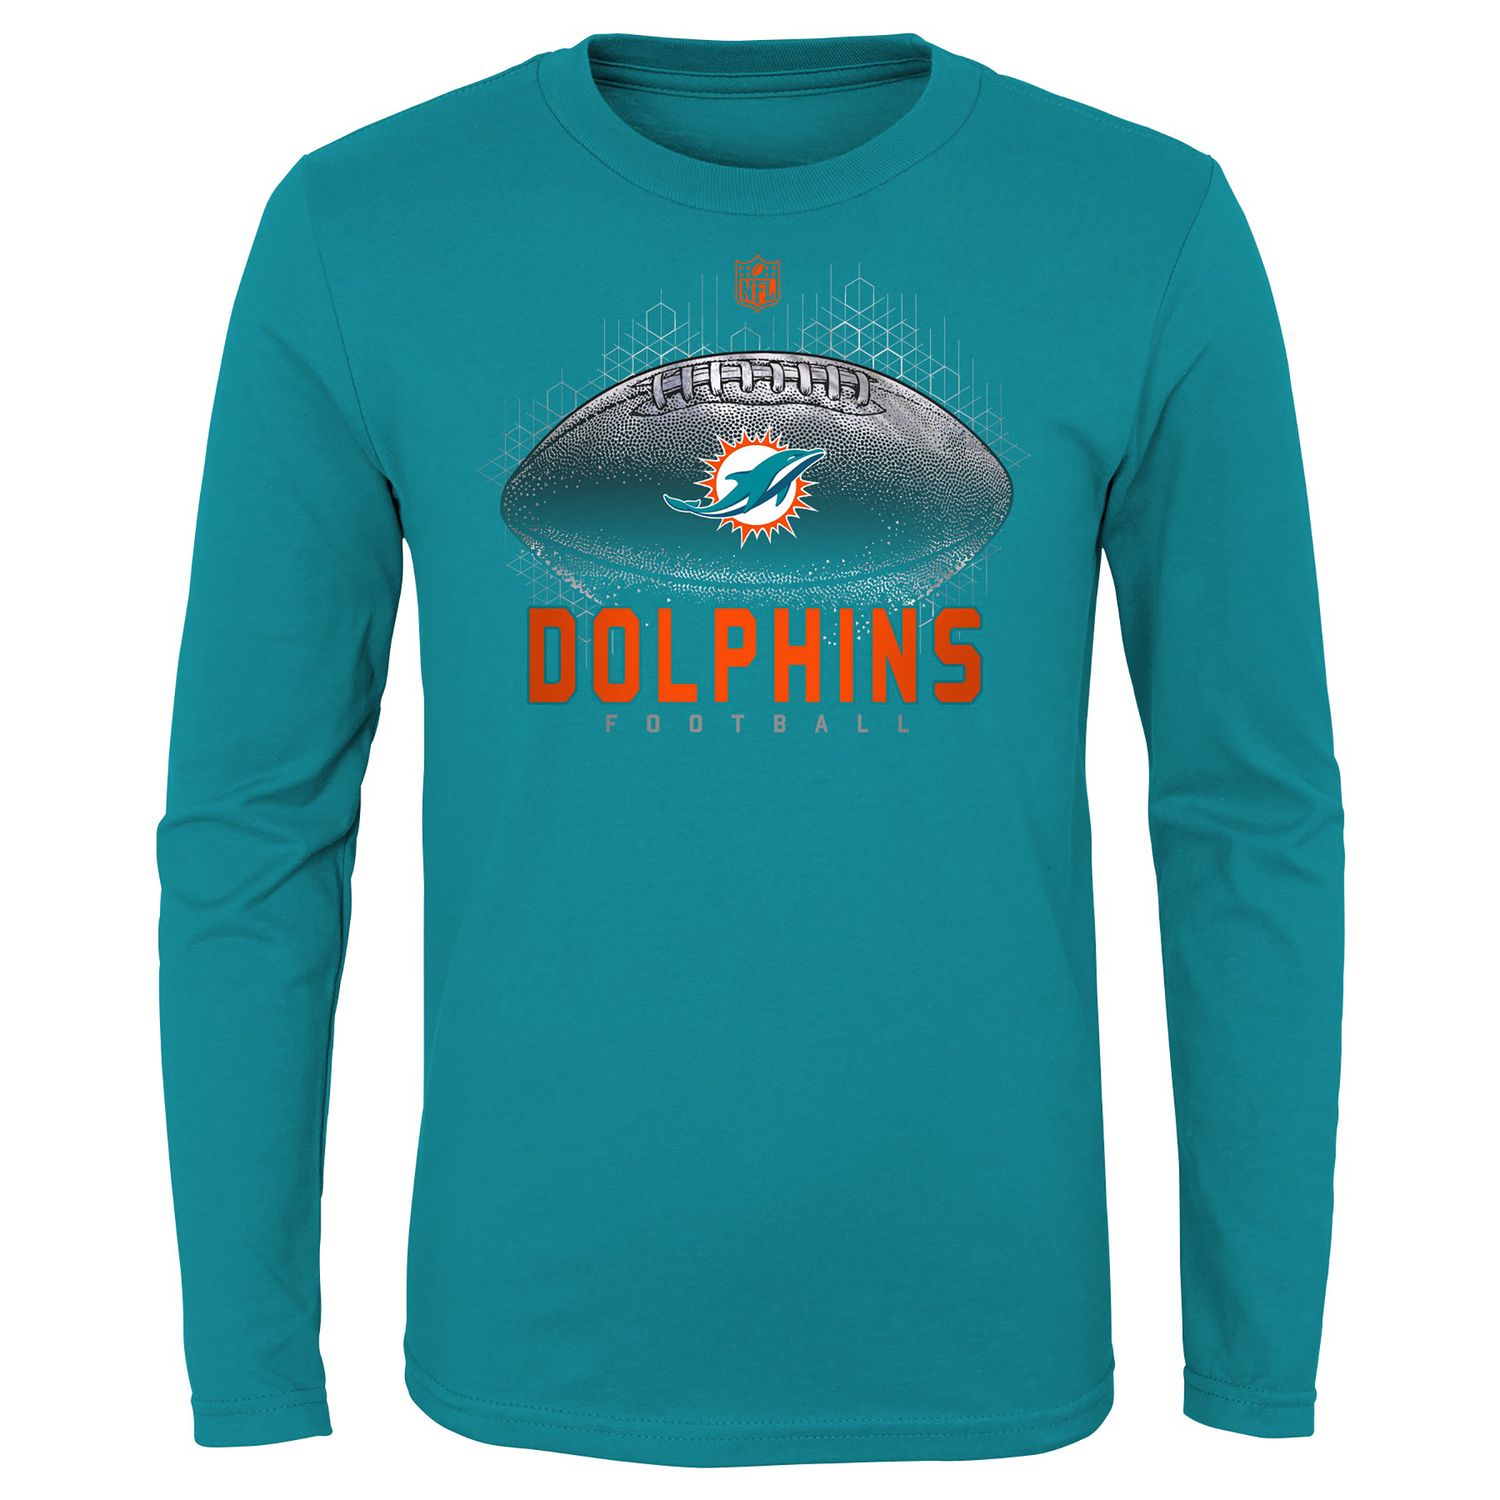 miami dolphins boys shirt